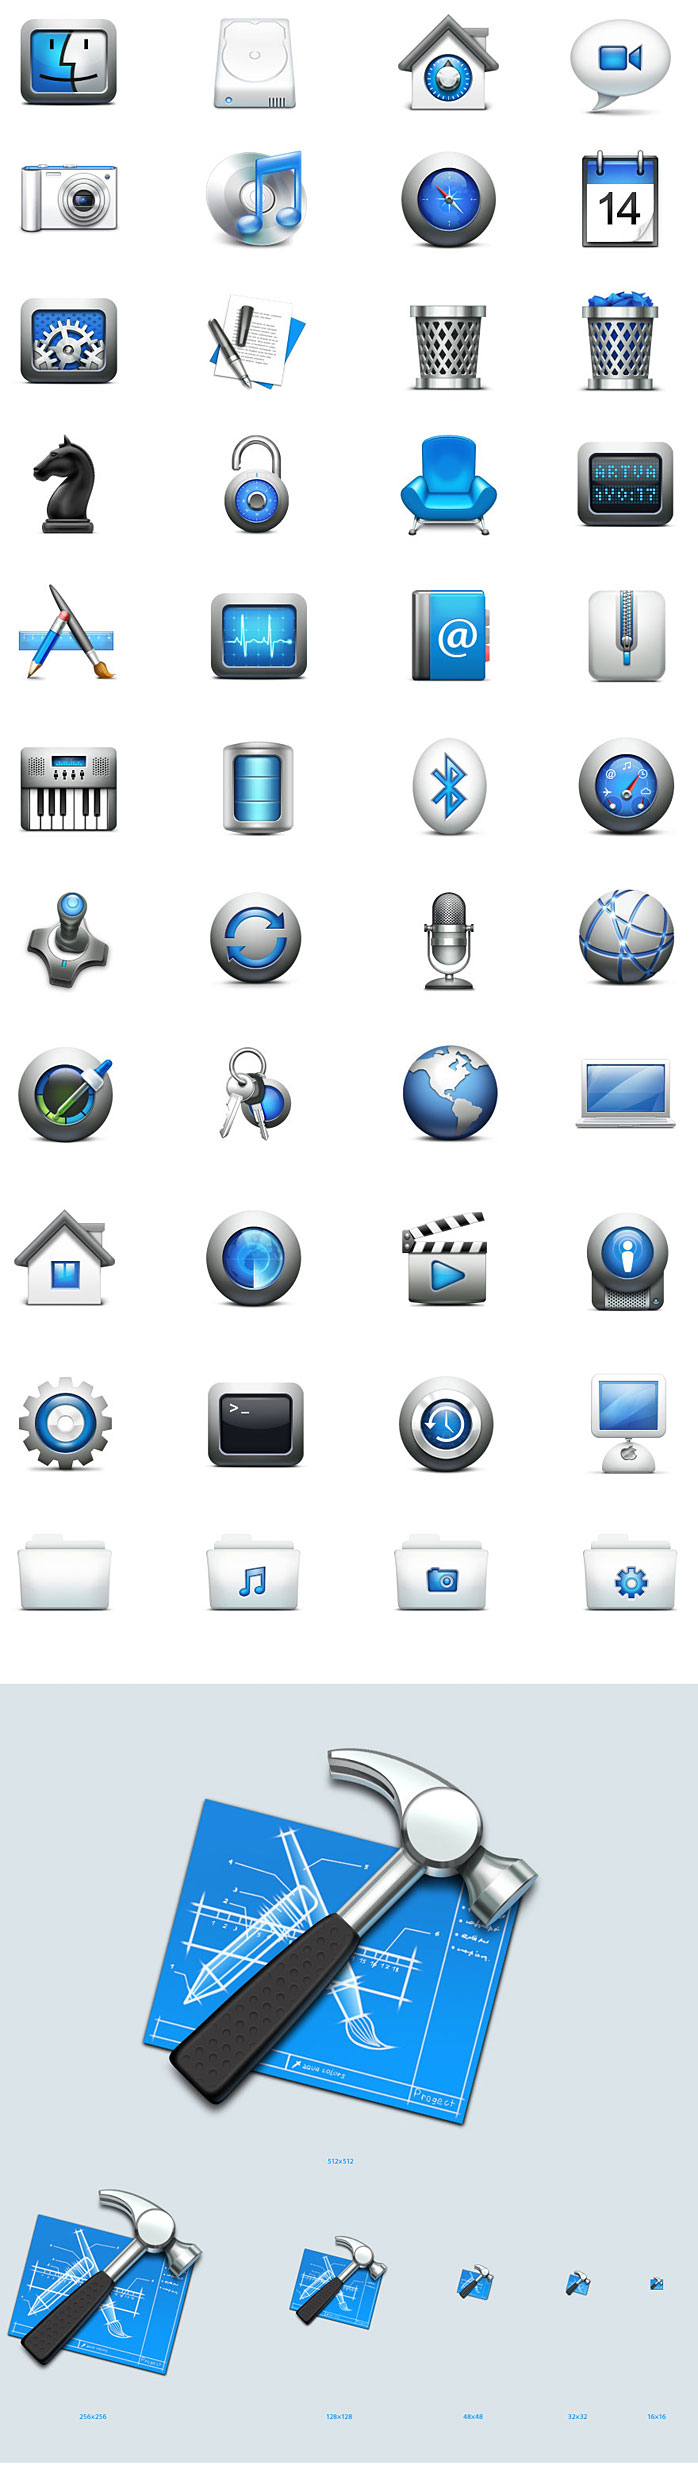 Mac OS X Icons